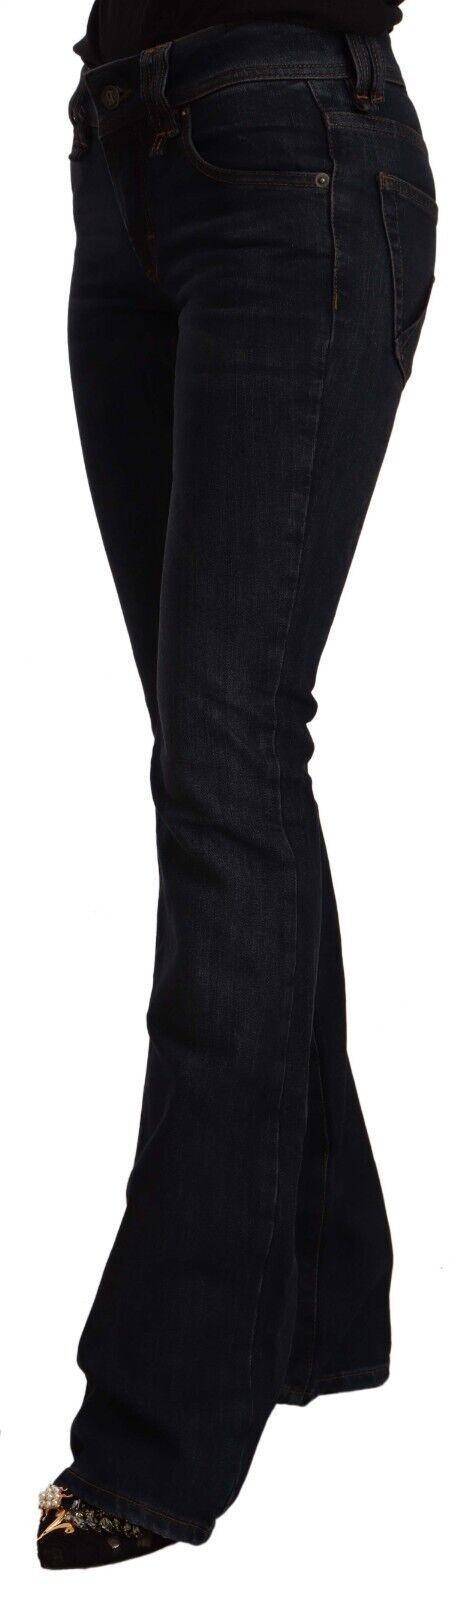 Chic Dark Blue Boot Cut Designer Jeans